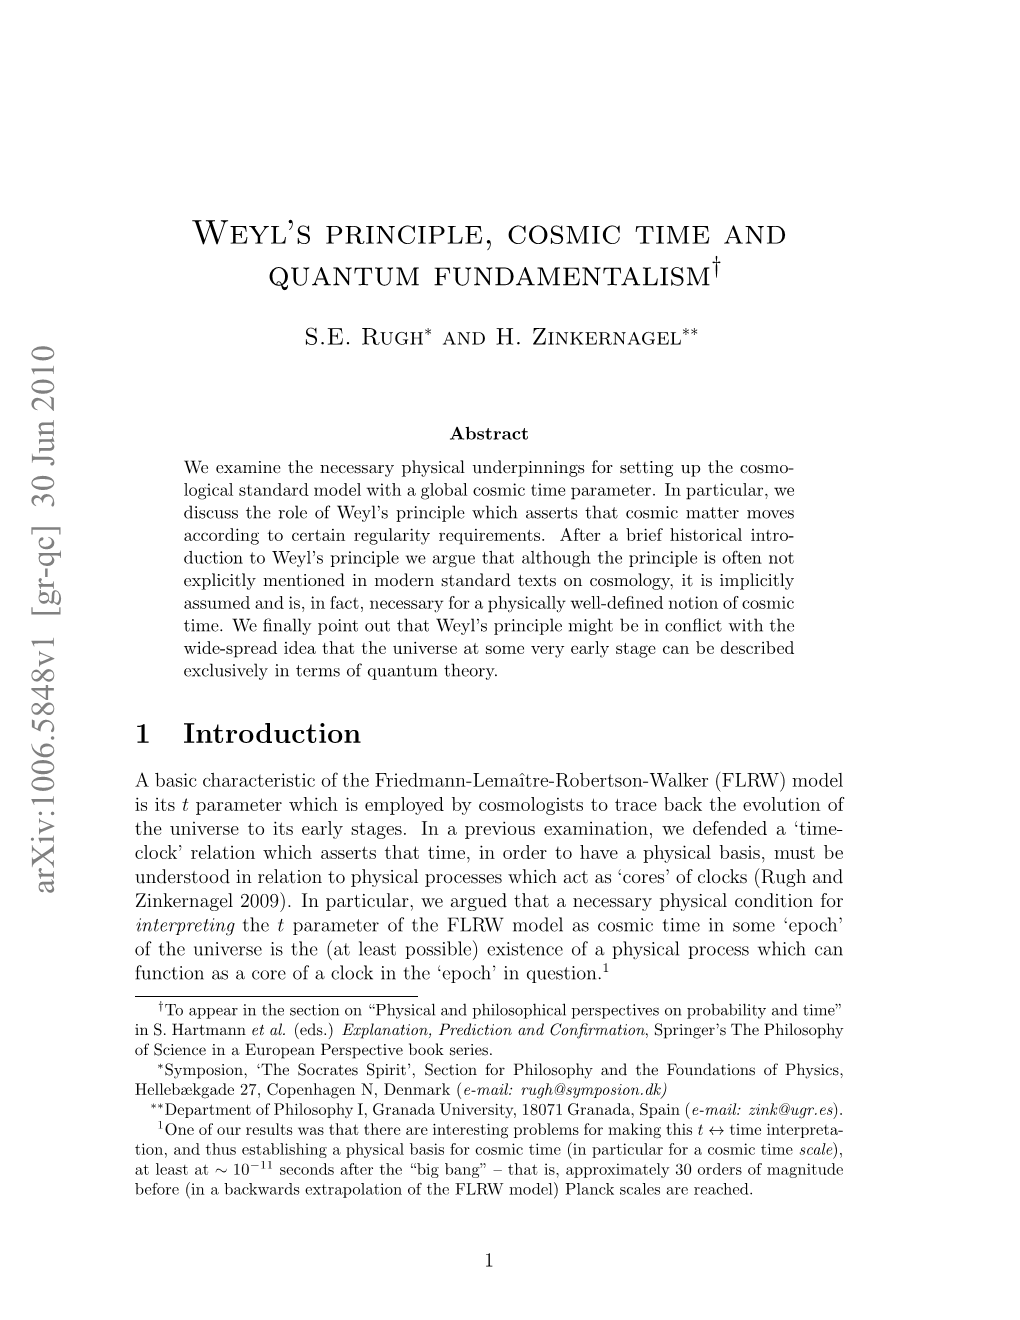 Weyl's Principle, Cosmic Time and Quantum Fundamentalism